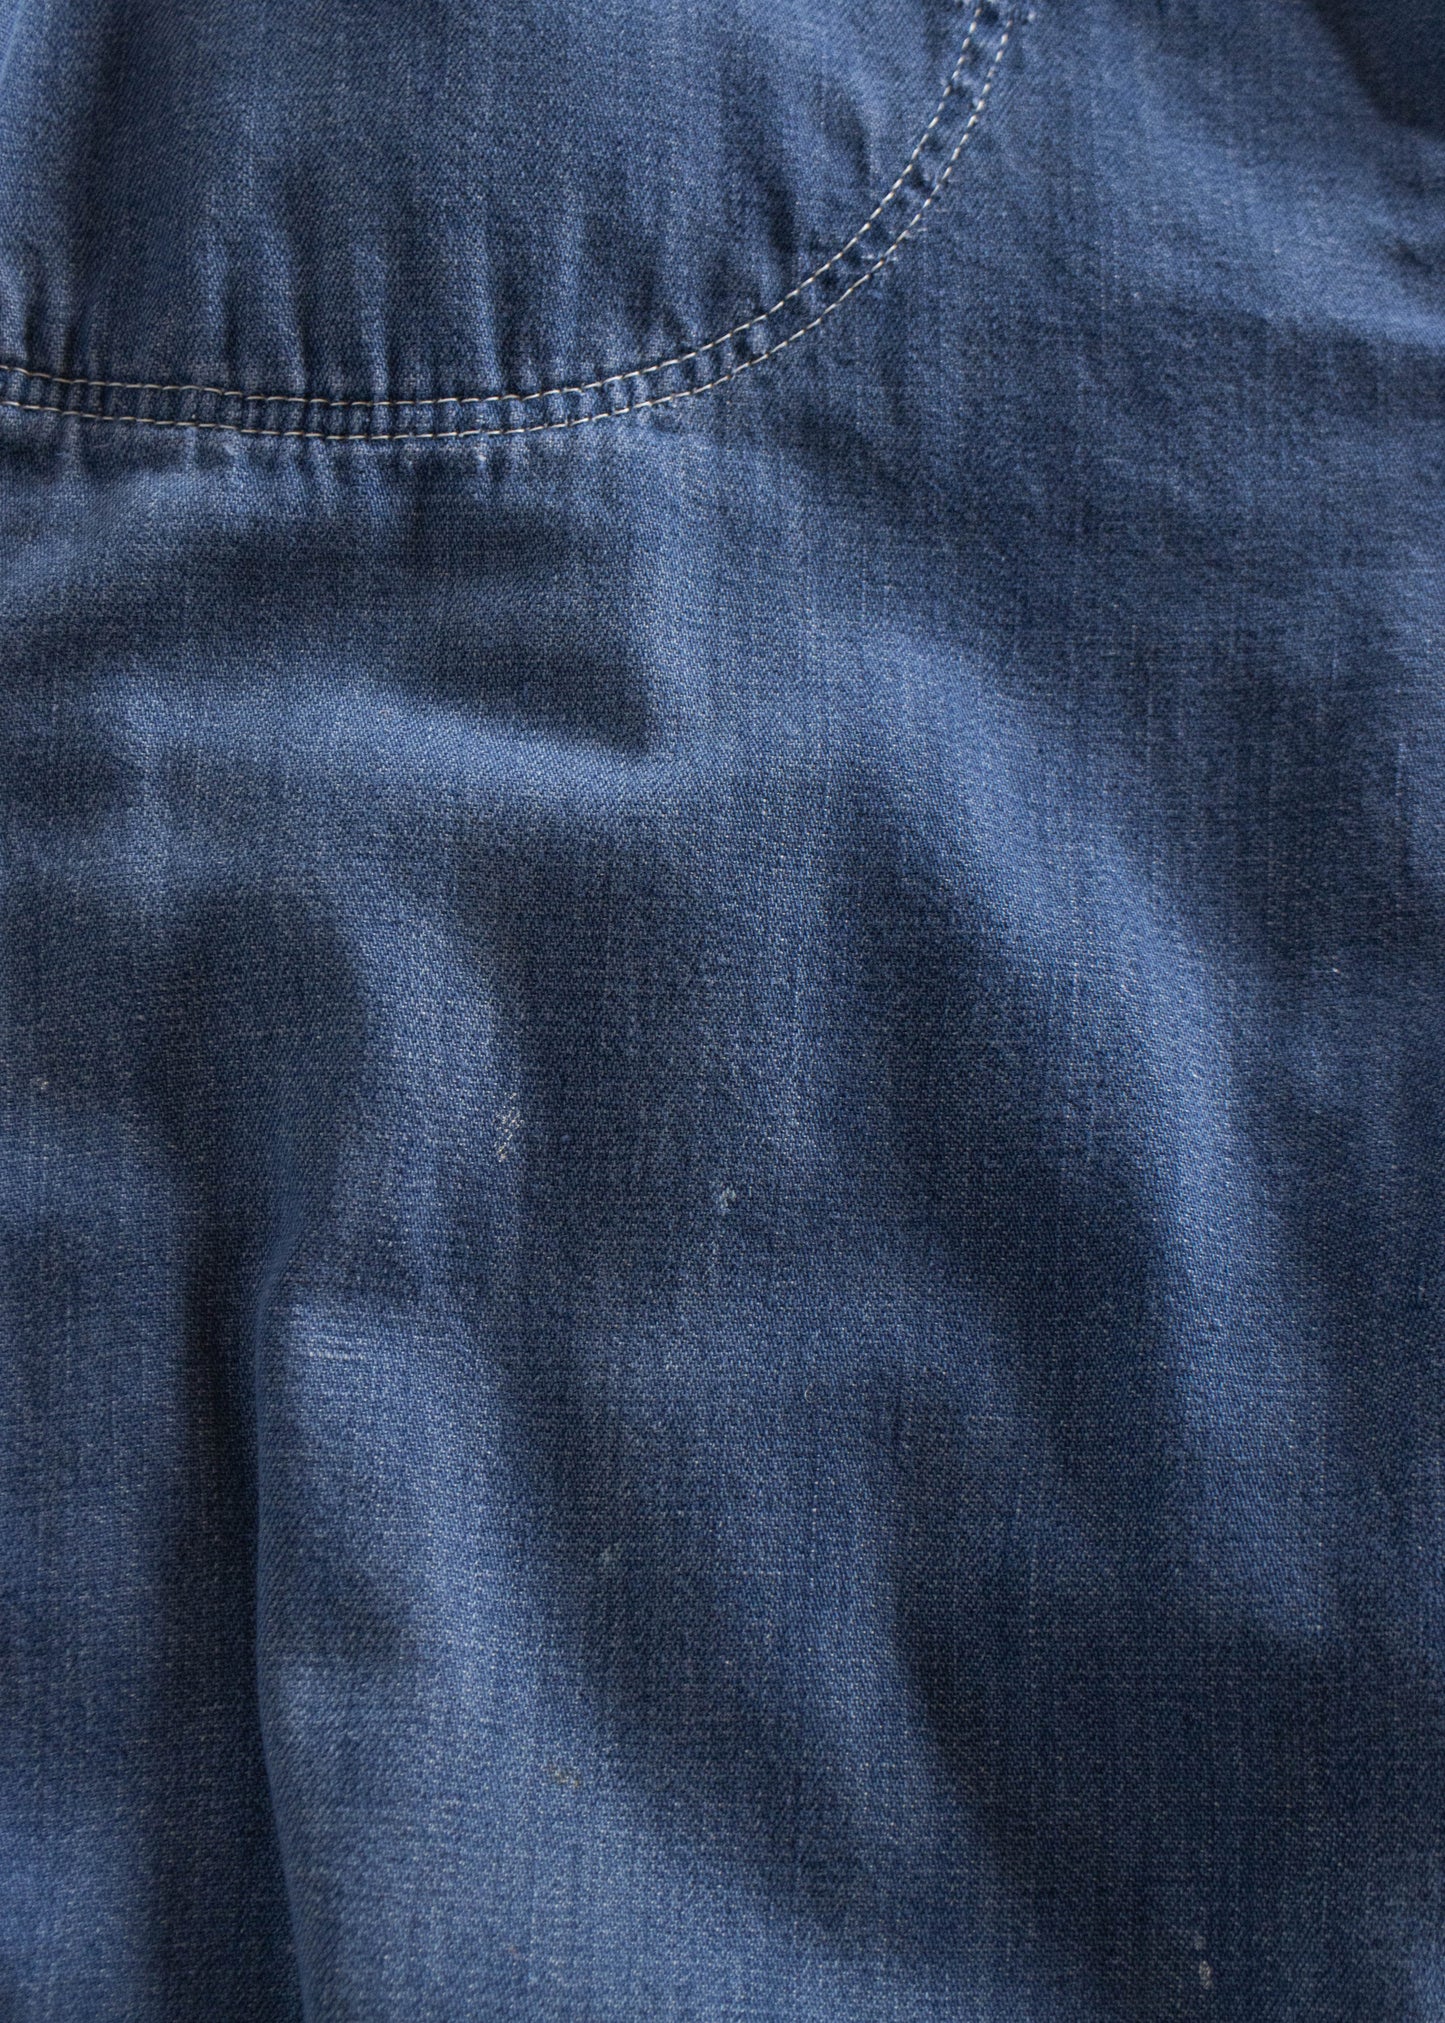 1940s Side Zip Darkwash Jeans Size Women's 24